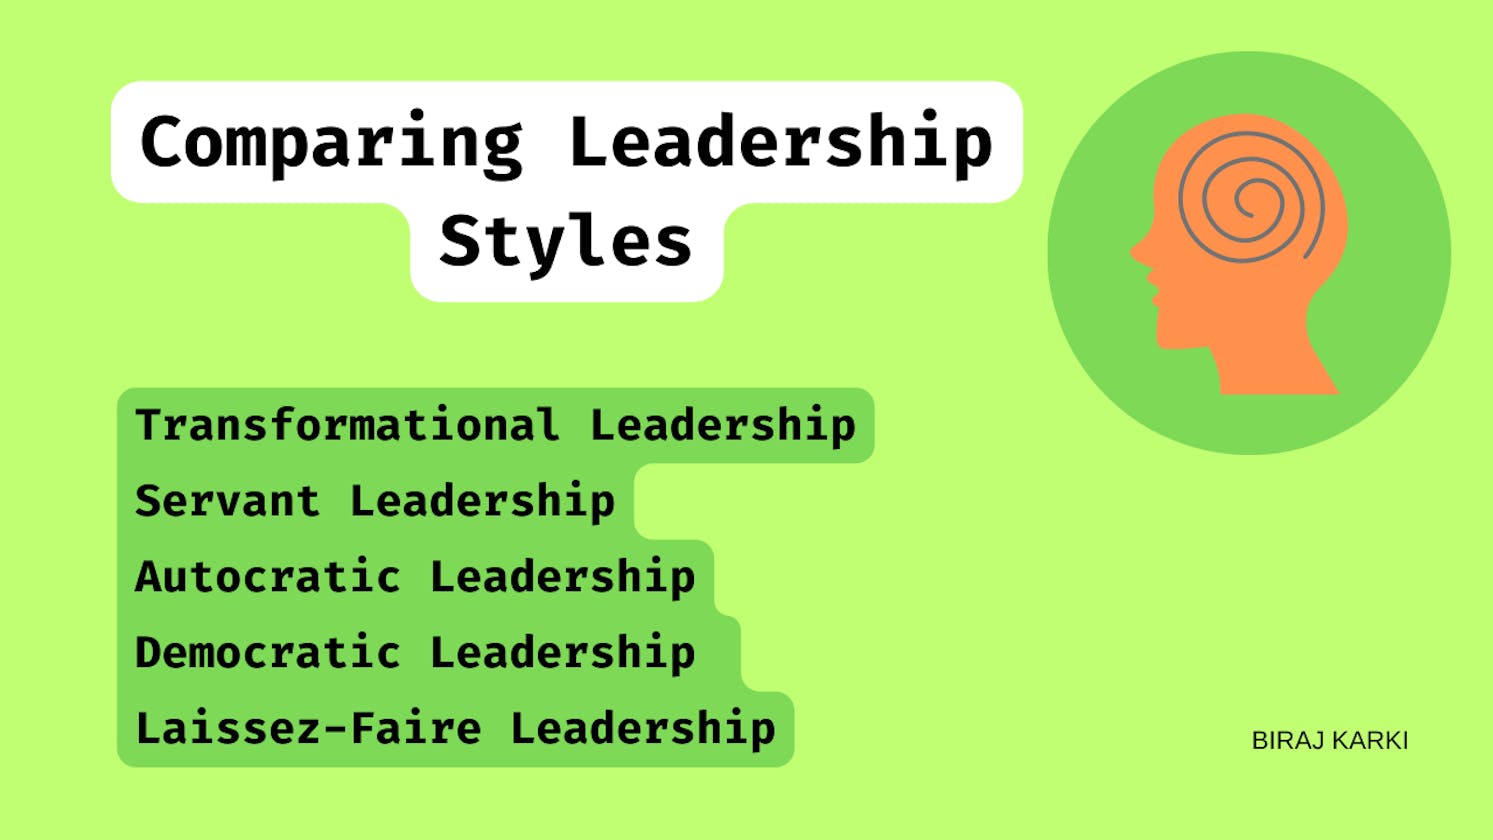 Comparing Leadership Styles: Transformational, Servant, Autocratic, Democratic, and Laissez-Faire